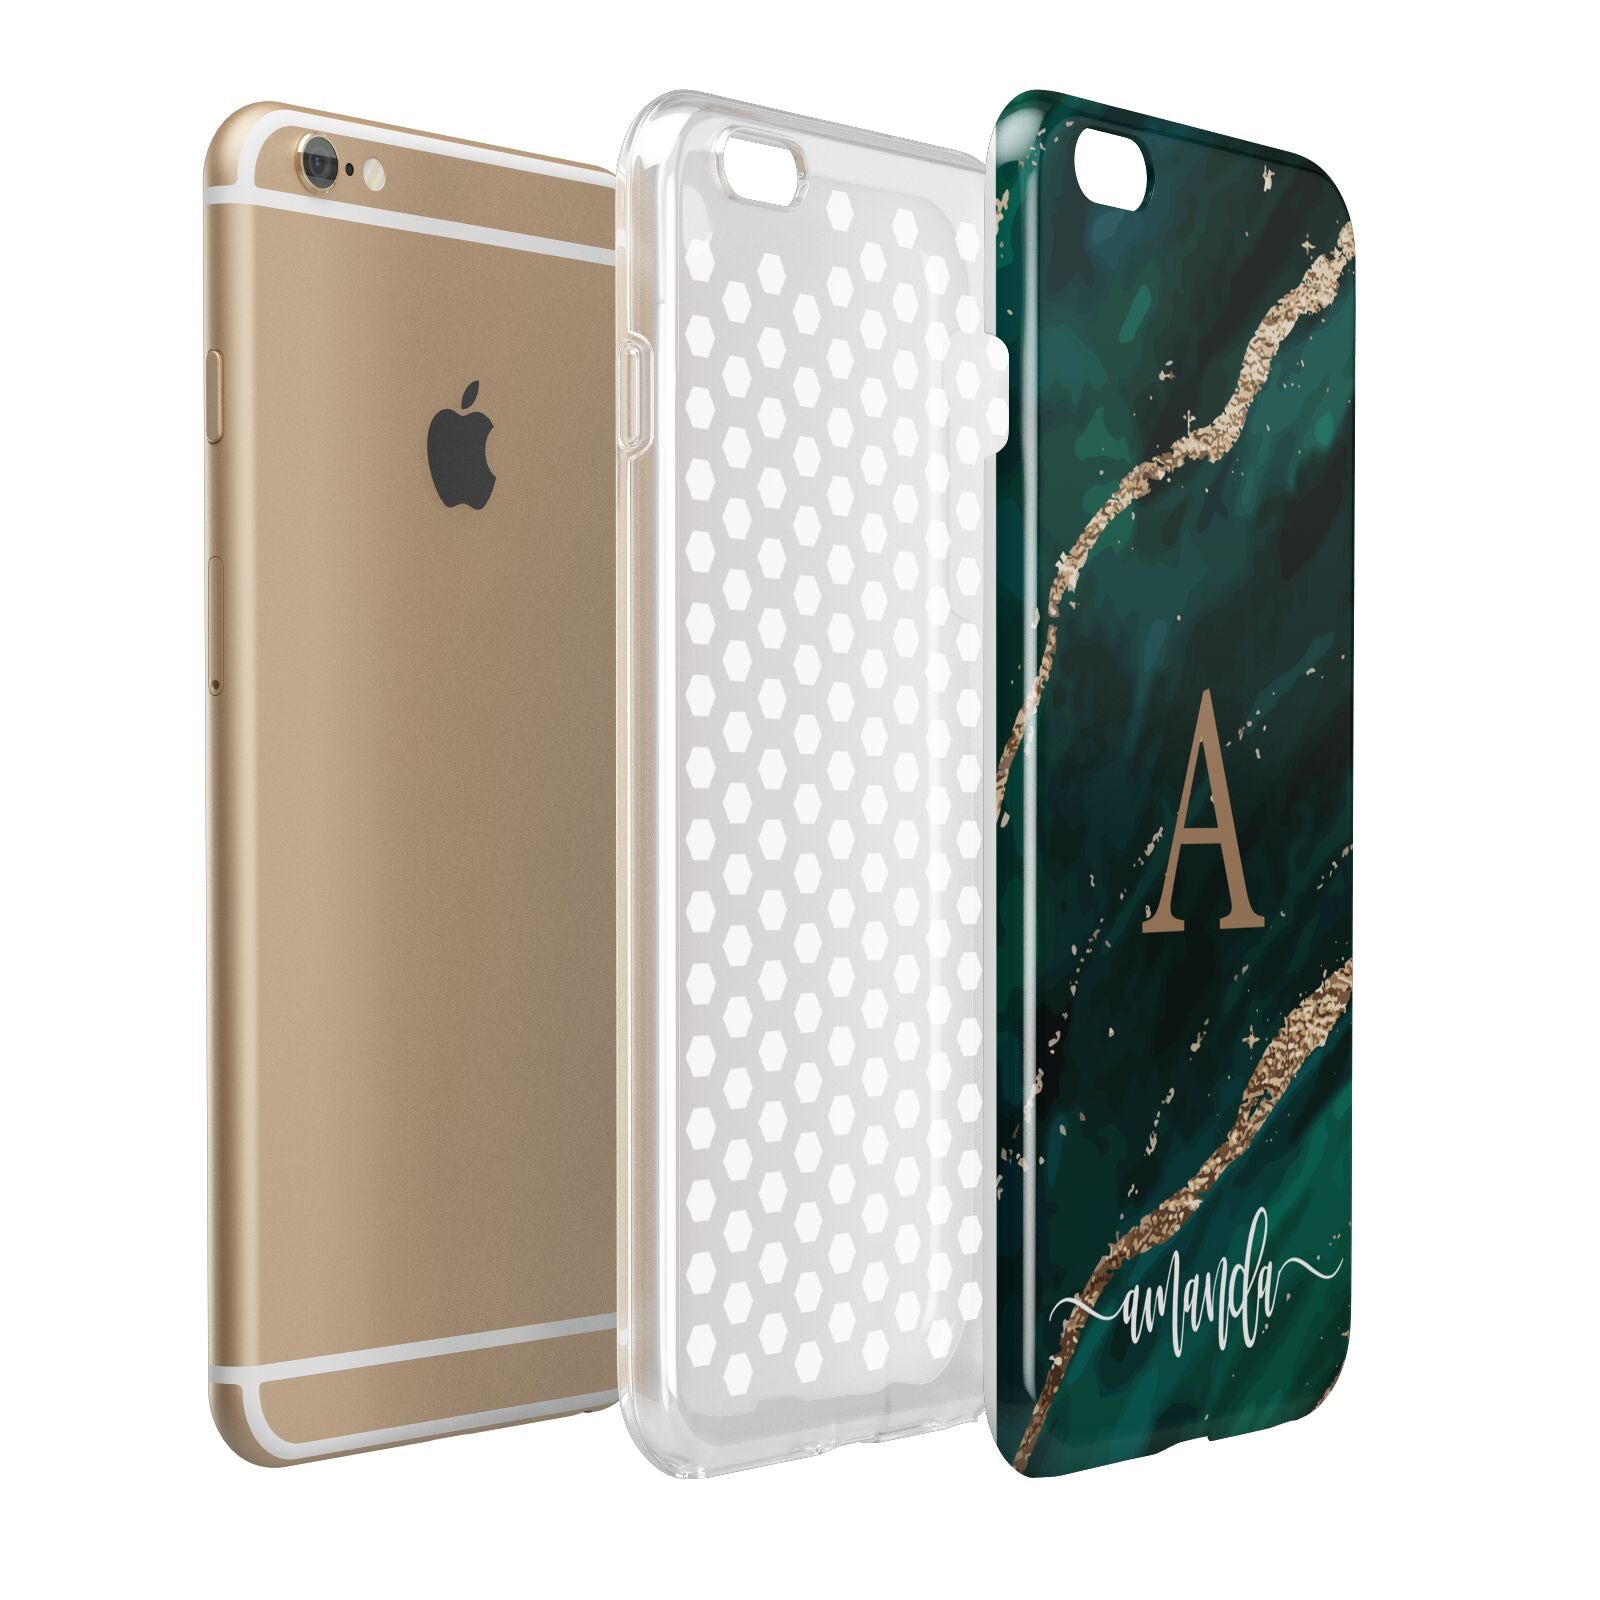 Green Marble Apple iPhone 6 Plus 3D Tough Case Expand Detail Image